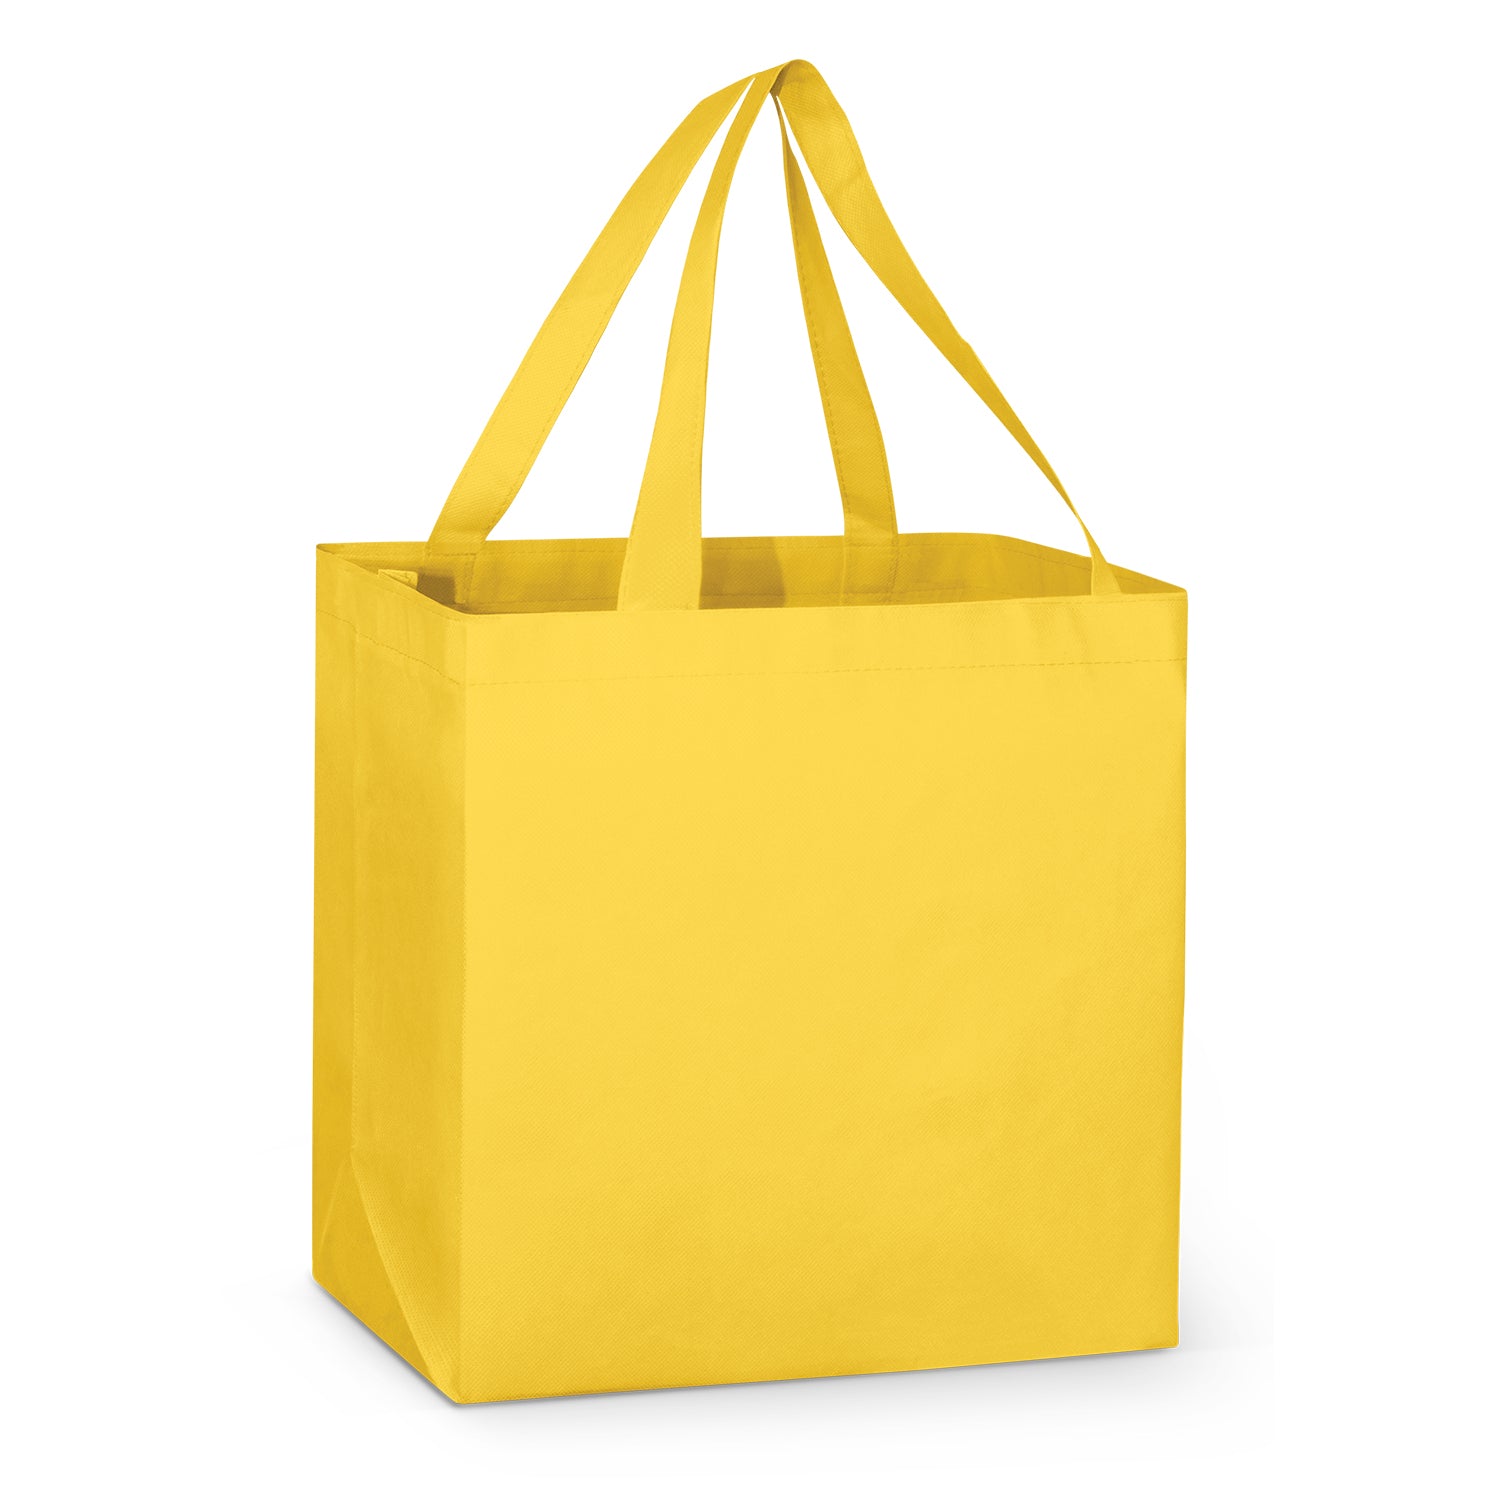 City Shopper Tote Bag [109931]